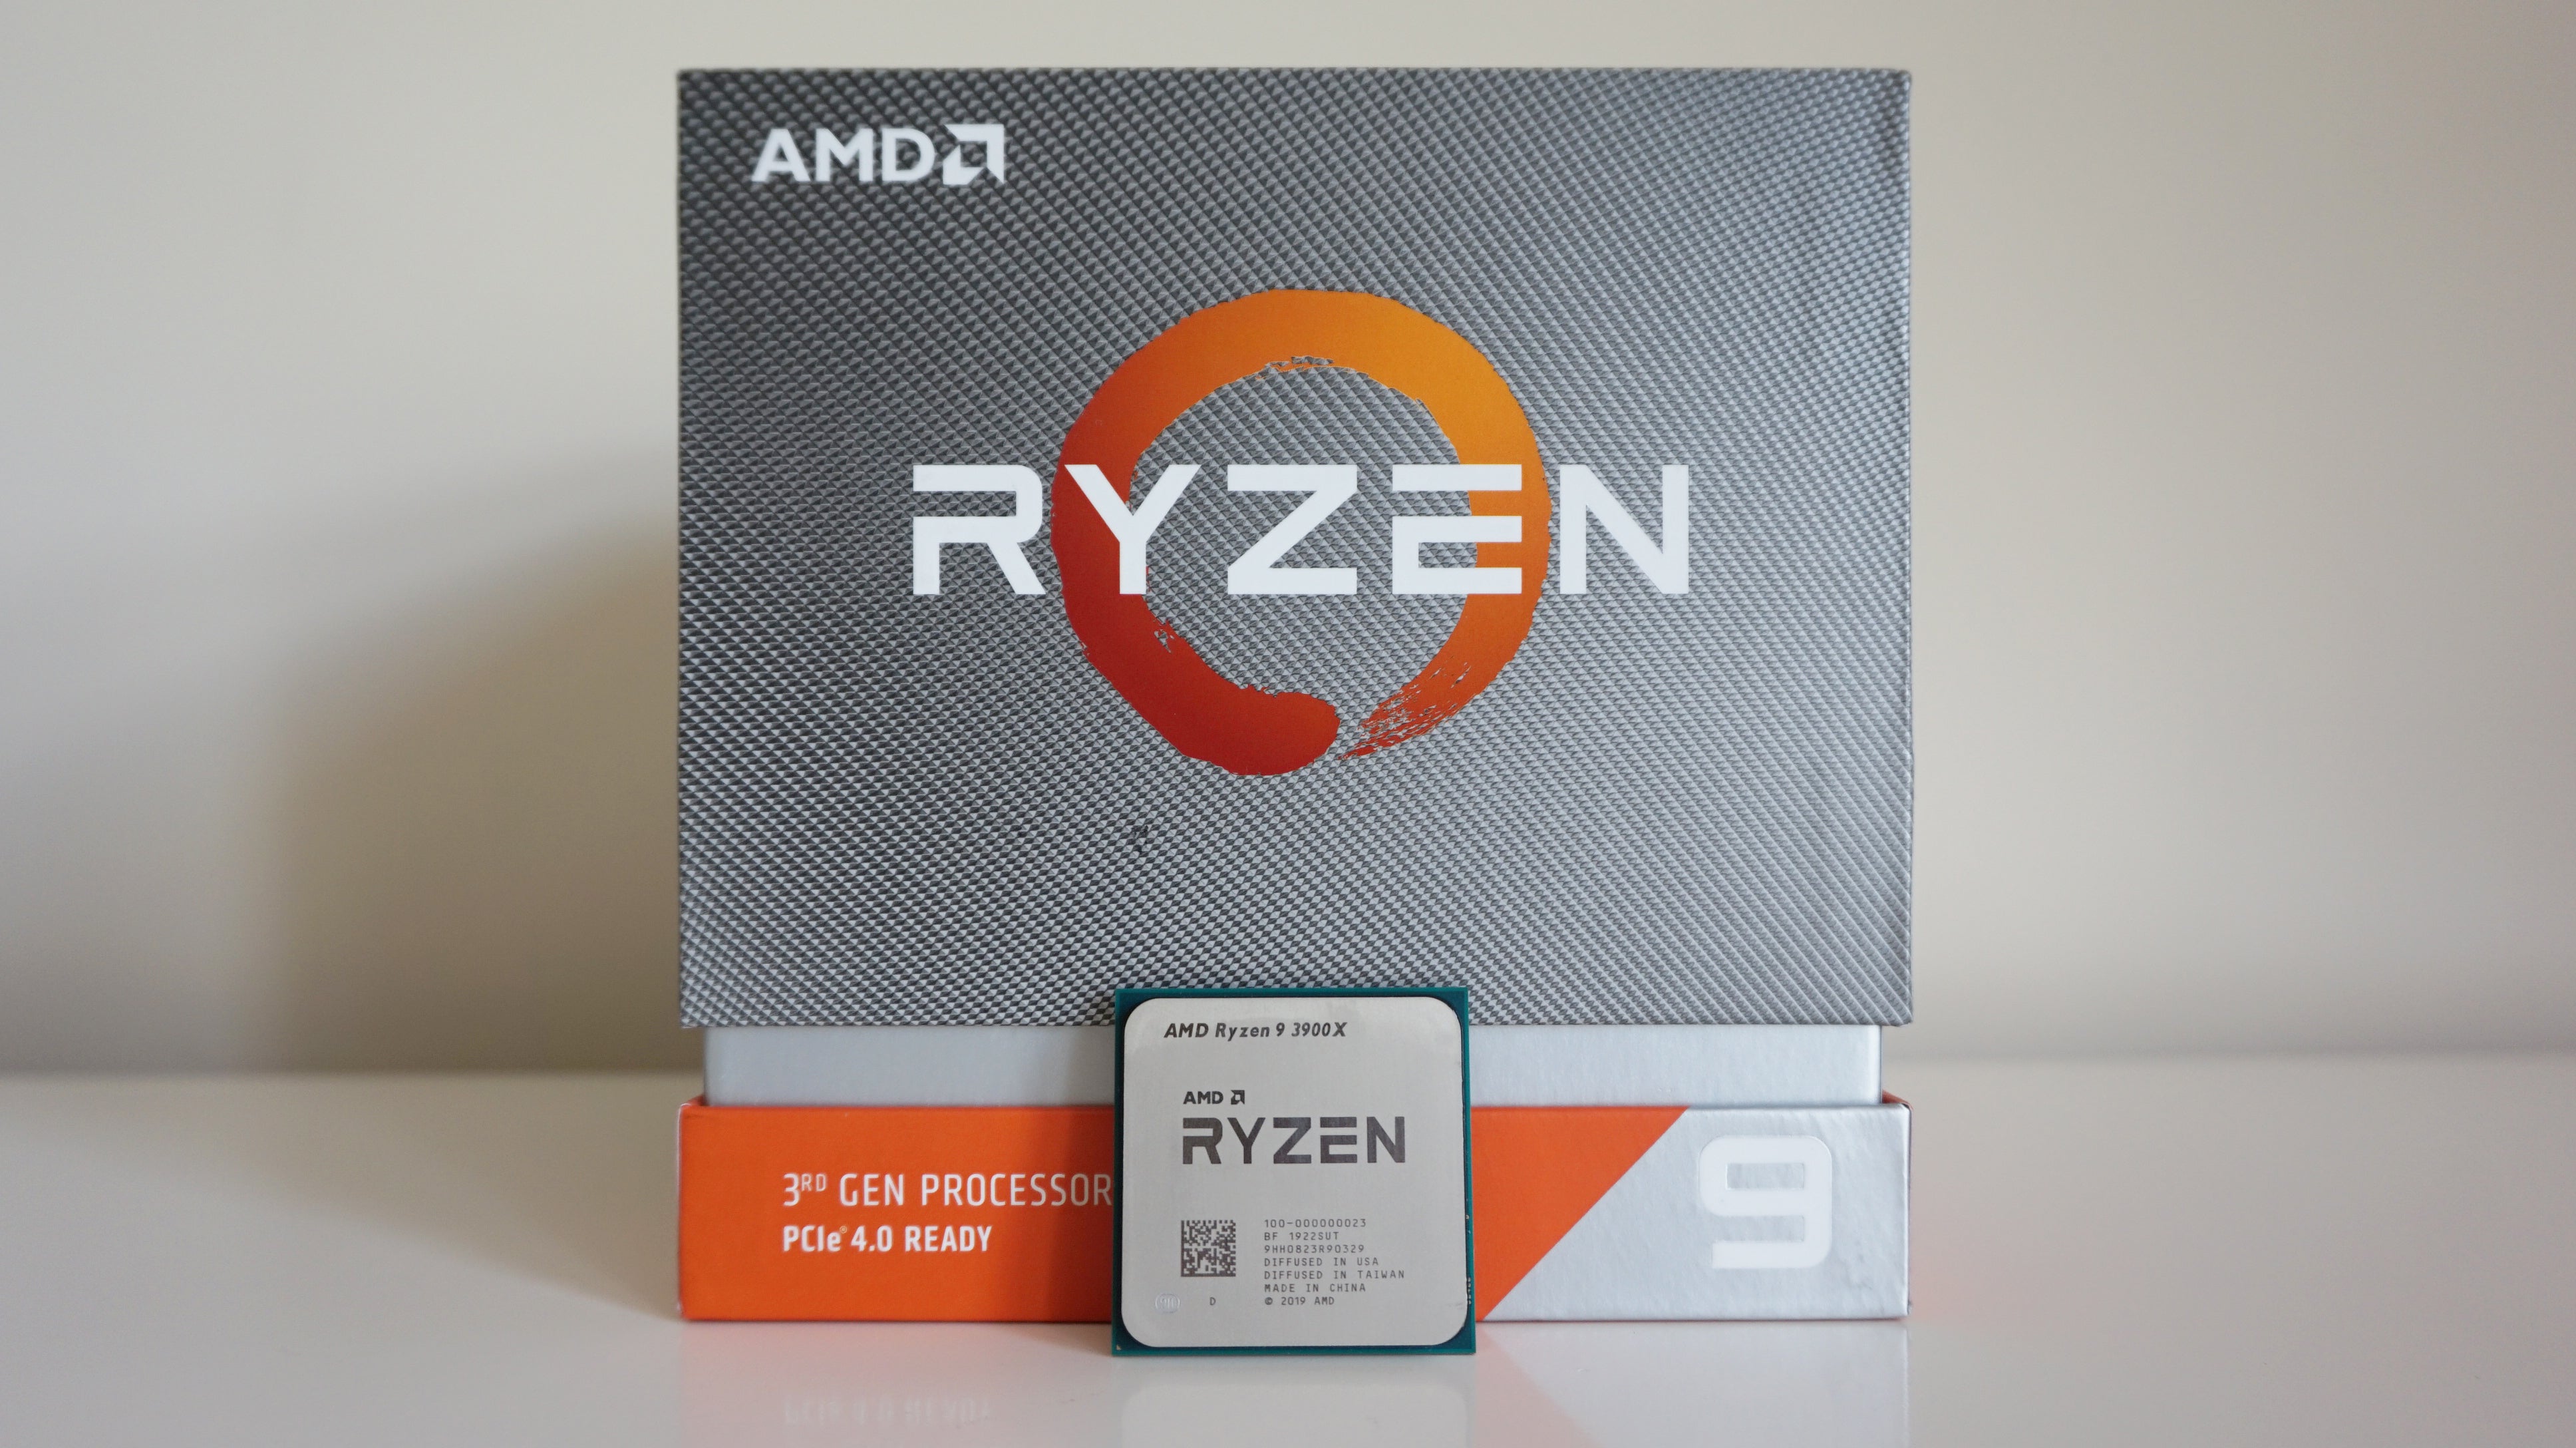 AMD Ryzen 9 3900X review: The Core i9-9900K killer? | Rock Paper